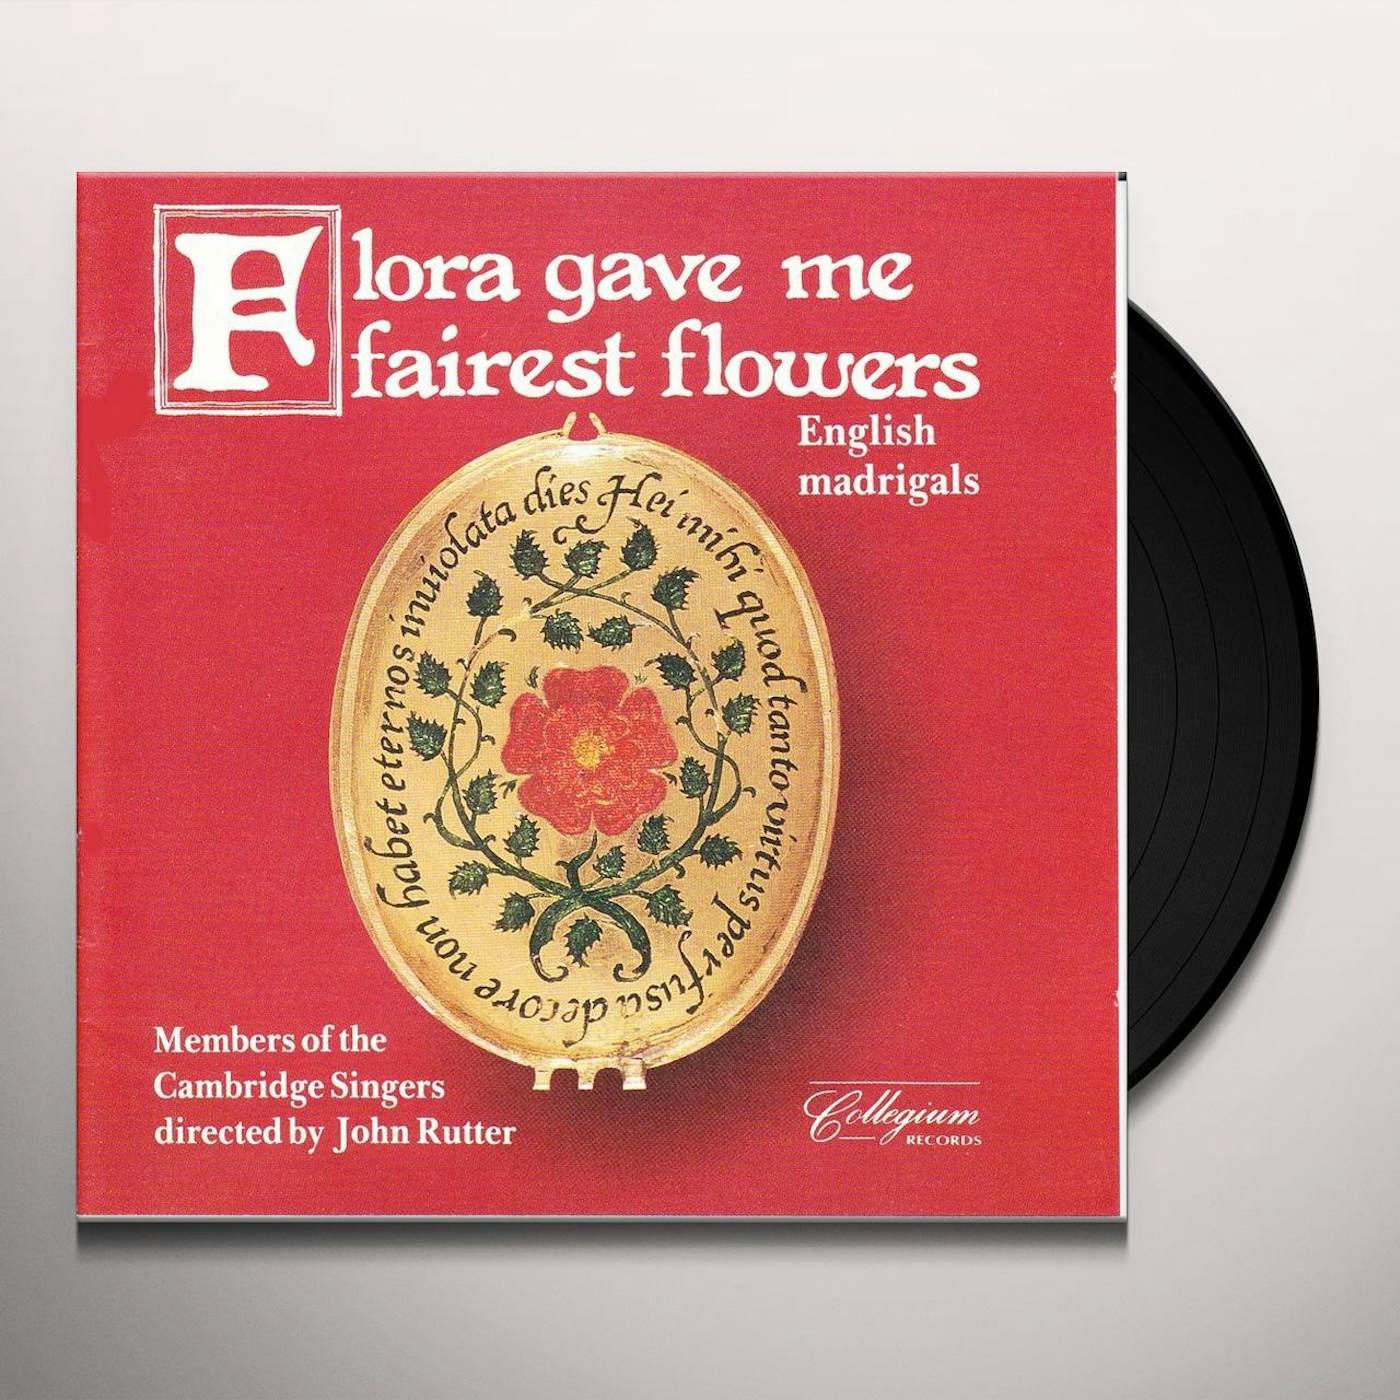 CAMBRIDGE SINGERS (MEMBERS OF) FLORA GAVE ME FAIREST FLOWERS: ENGLISH MADRIGALS Vinyl Record